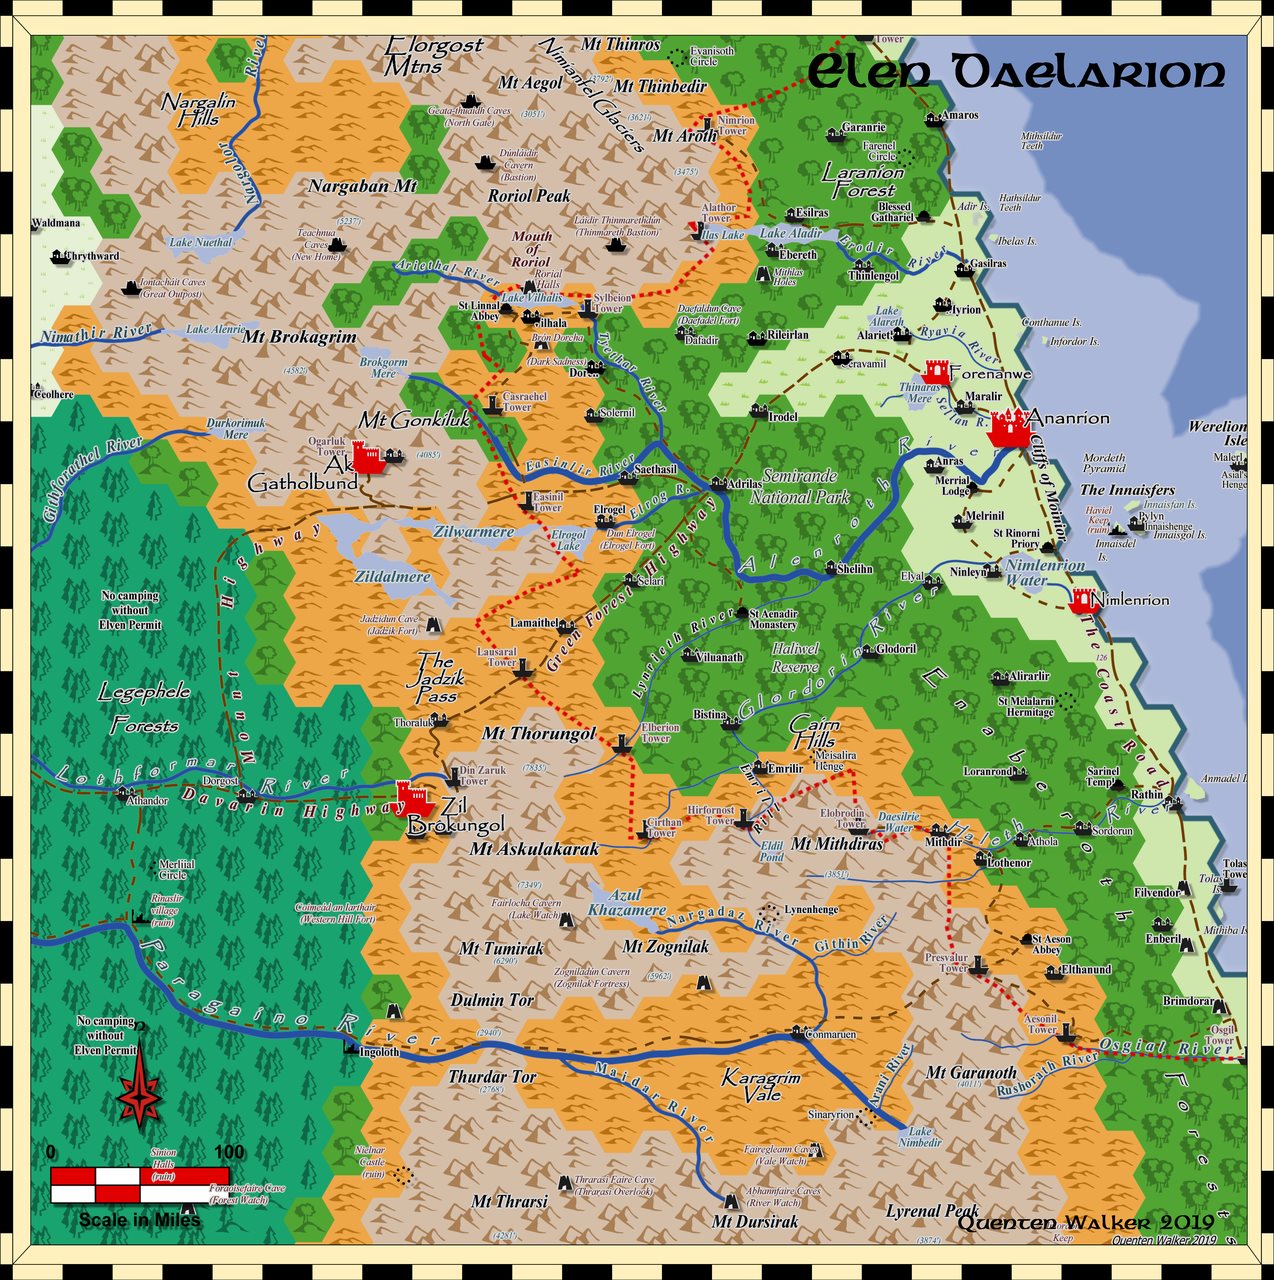 Nibirum Map: elen daelarion - hex overland by Quenten Walker